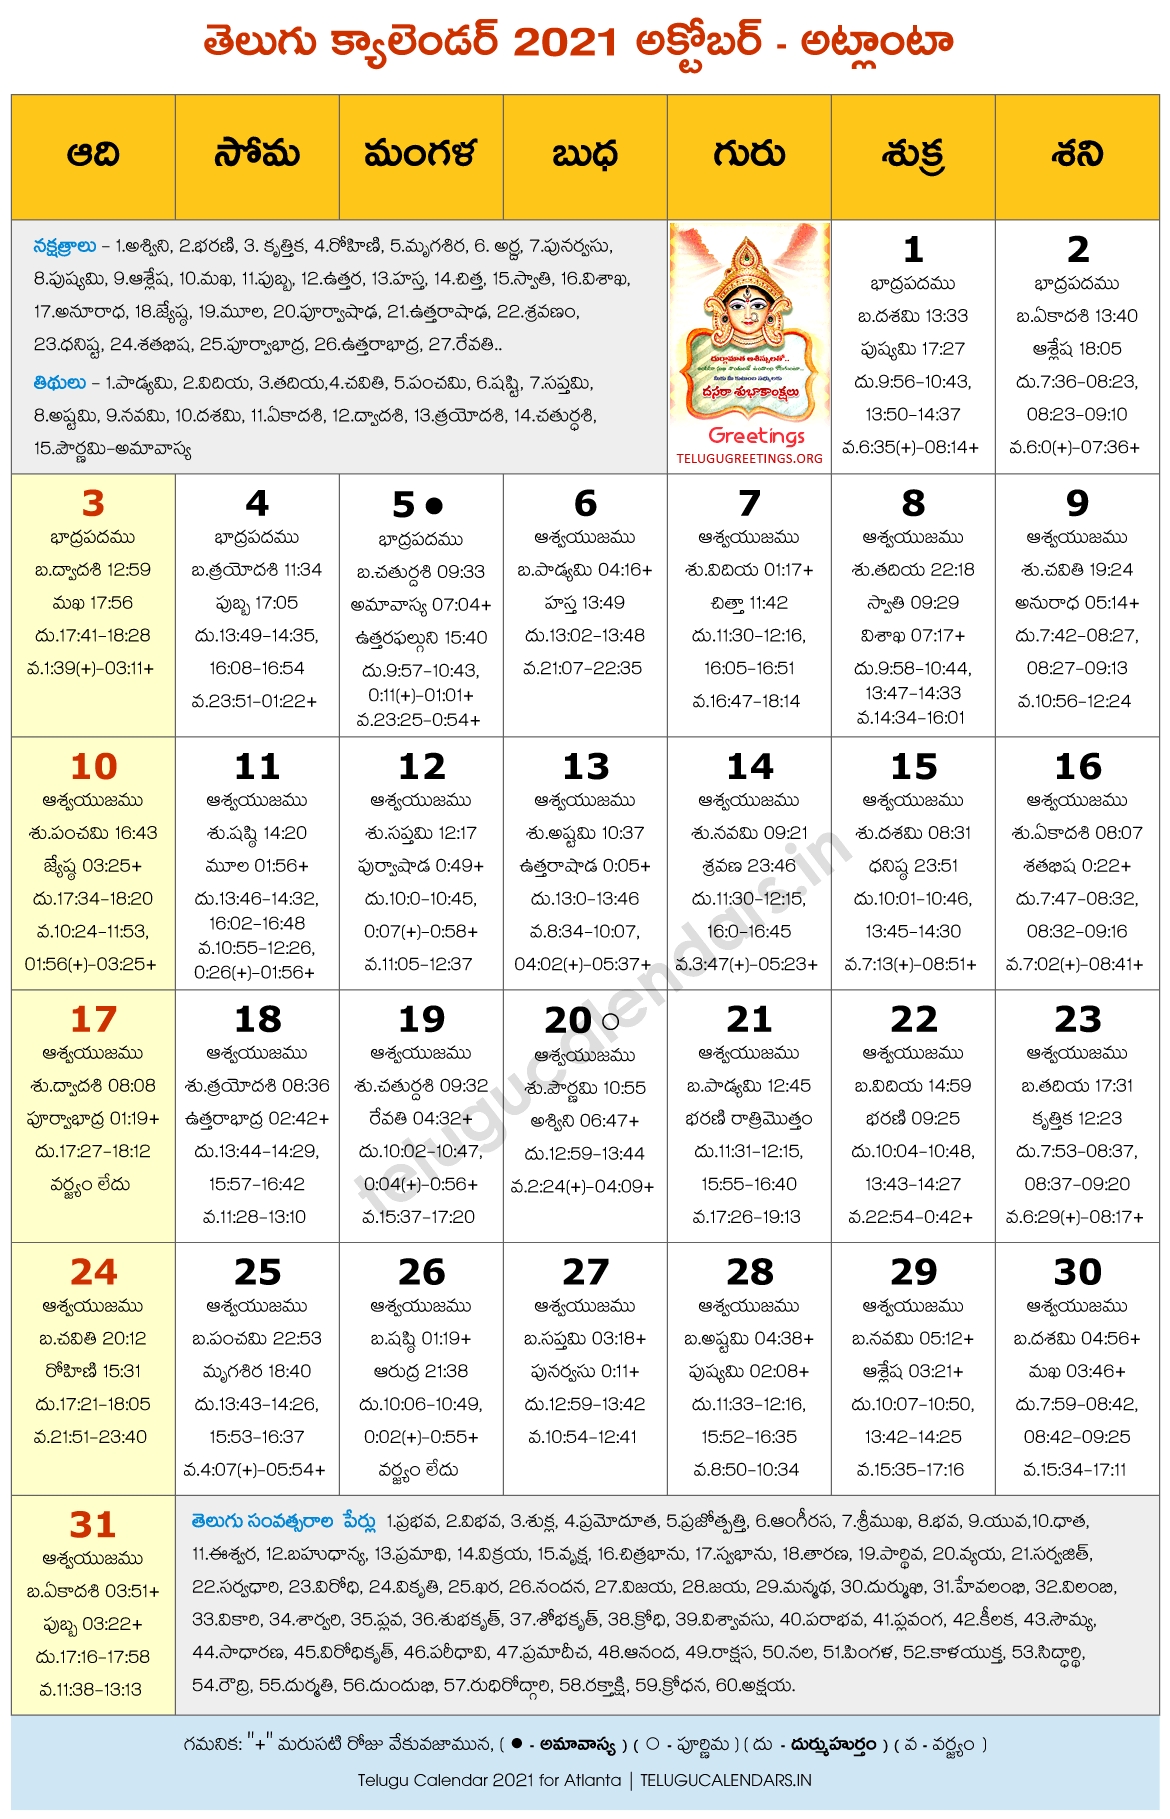 Atlanta 2021 October Telugu Calendar | Telugu Calendars Telugu Calendar 2021 November Andhra Pradesh